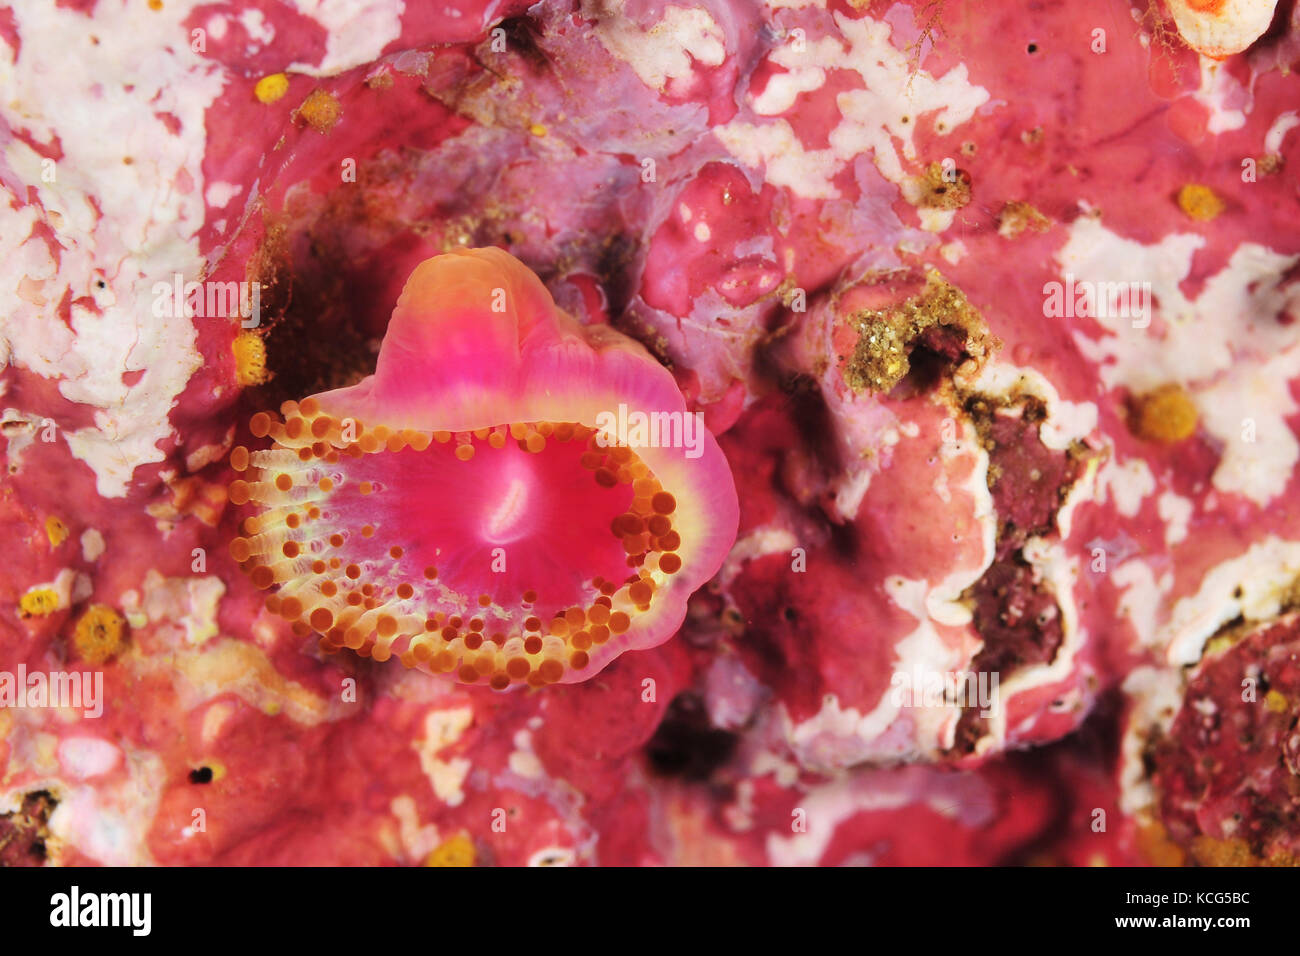 Single jewel anemone Corynactis australis on rock covered with pink coralline algae. Stock Photo